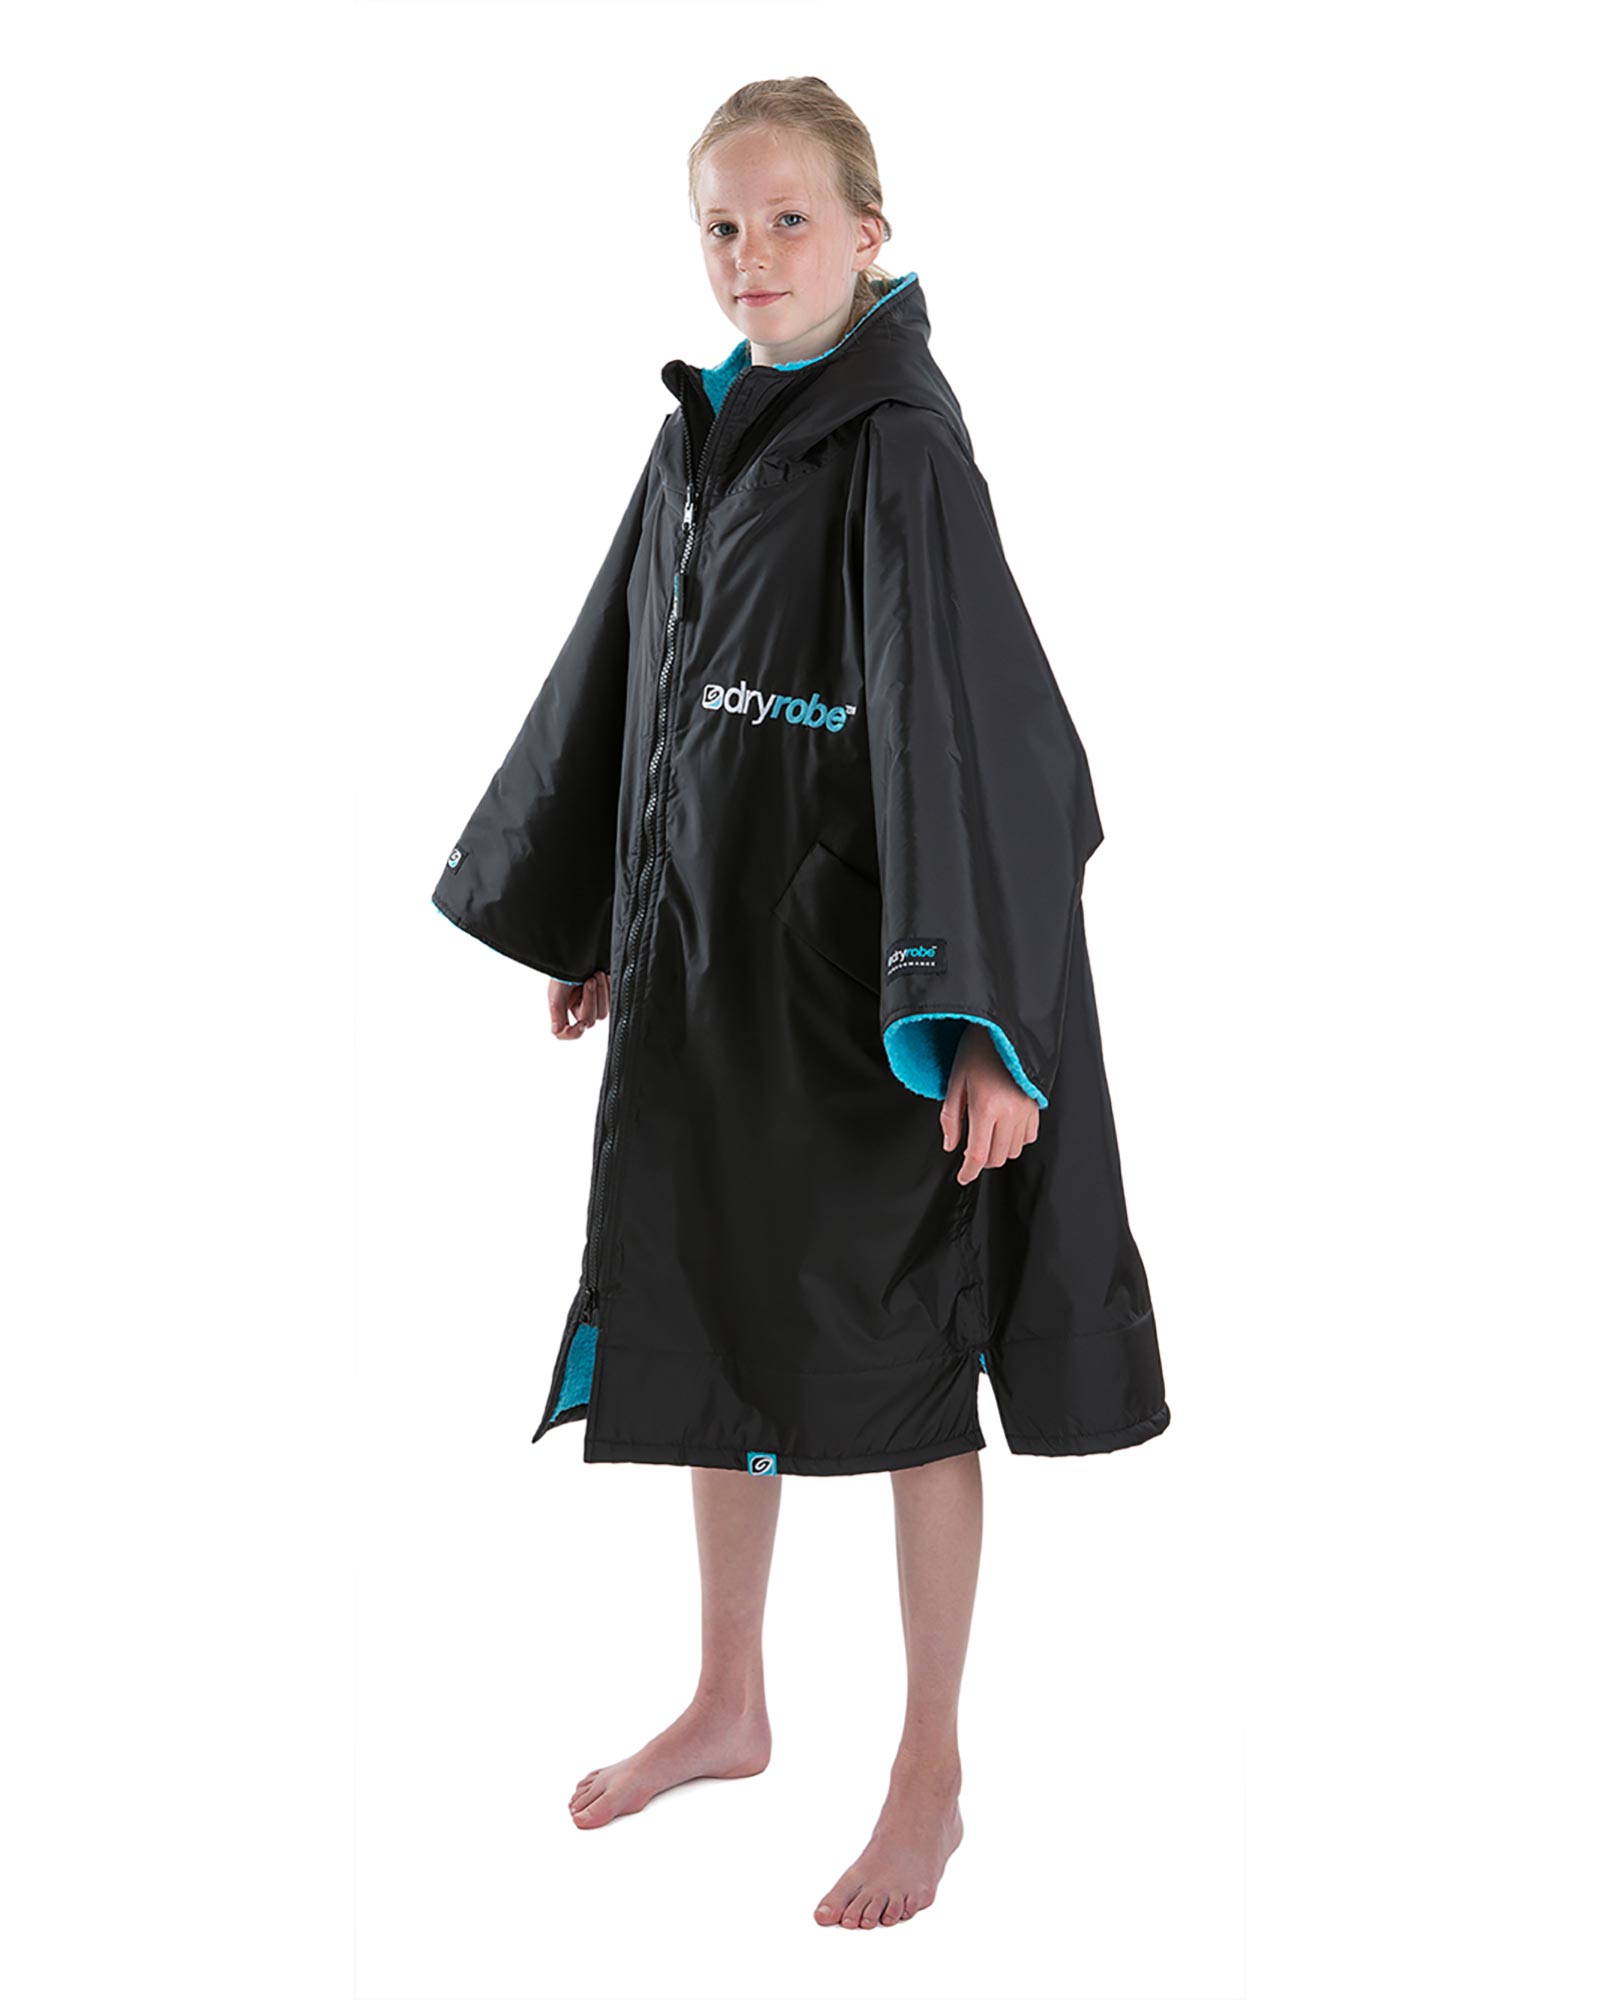 Dryrobe Advance Kids’ Short Sleeve - Black/Blue S